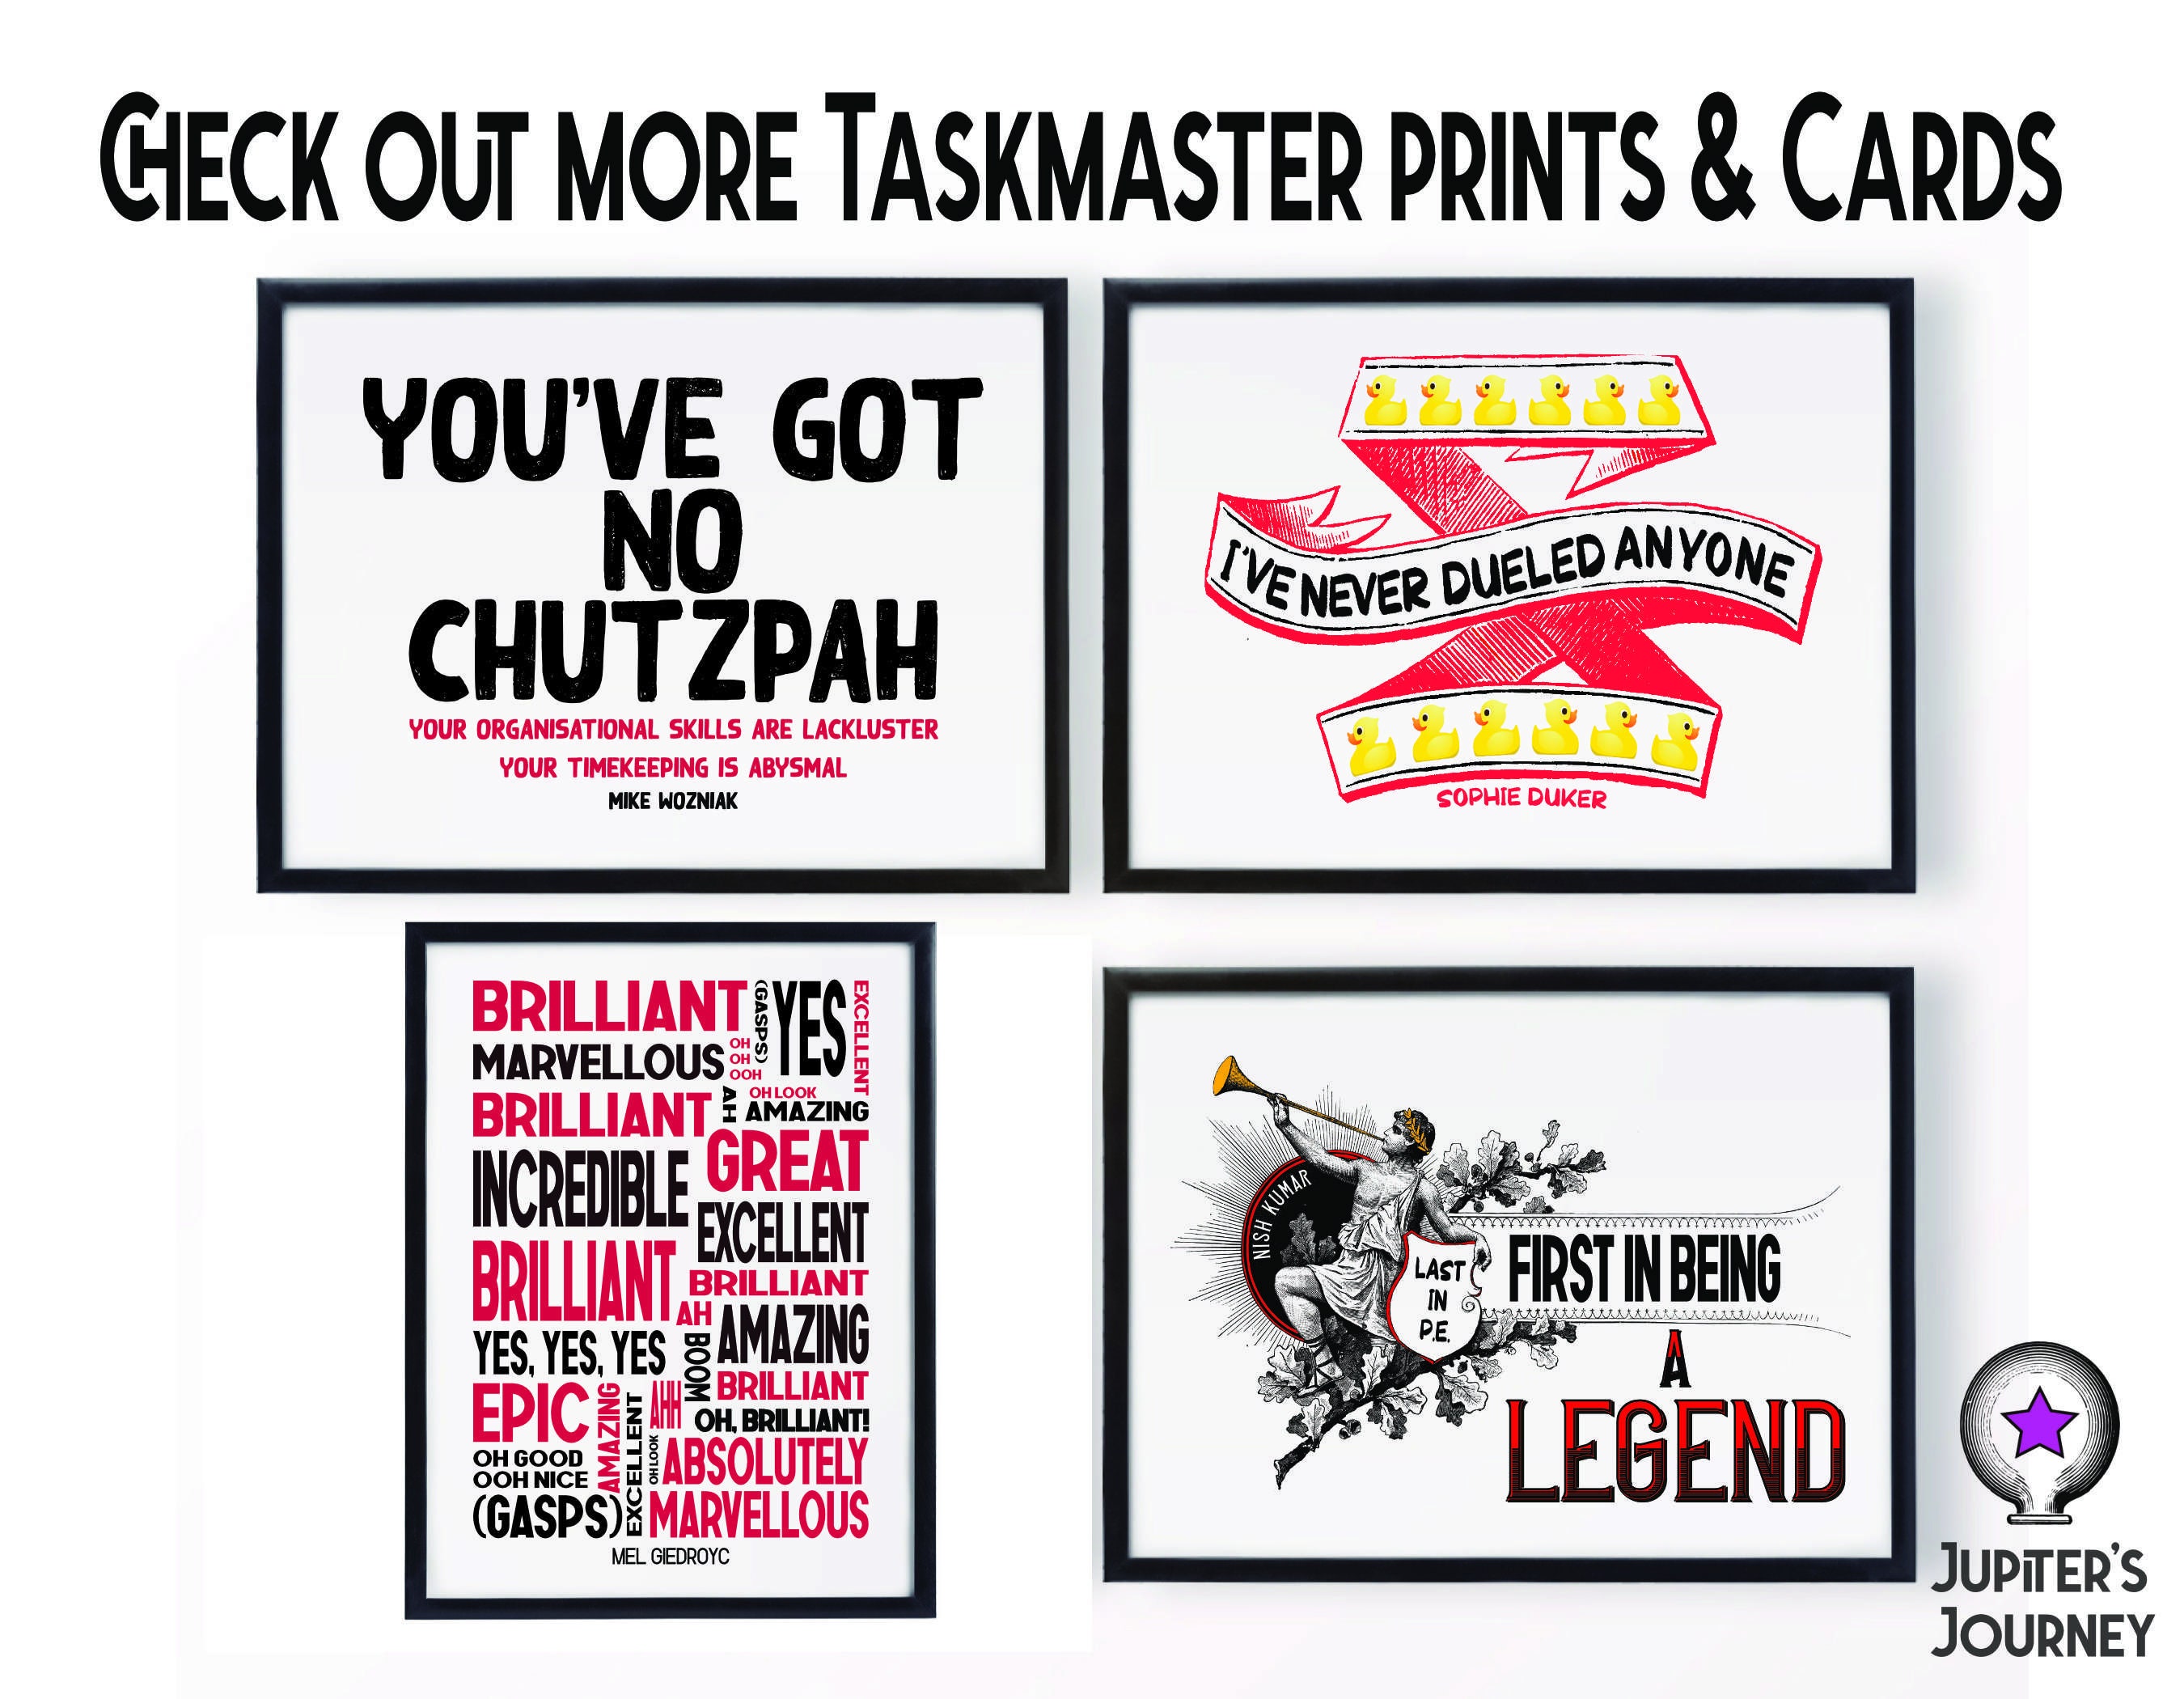 Mike Wozniak, Taskmaster, “You’ve got no chutzpah.”